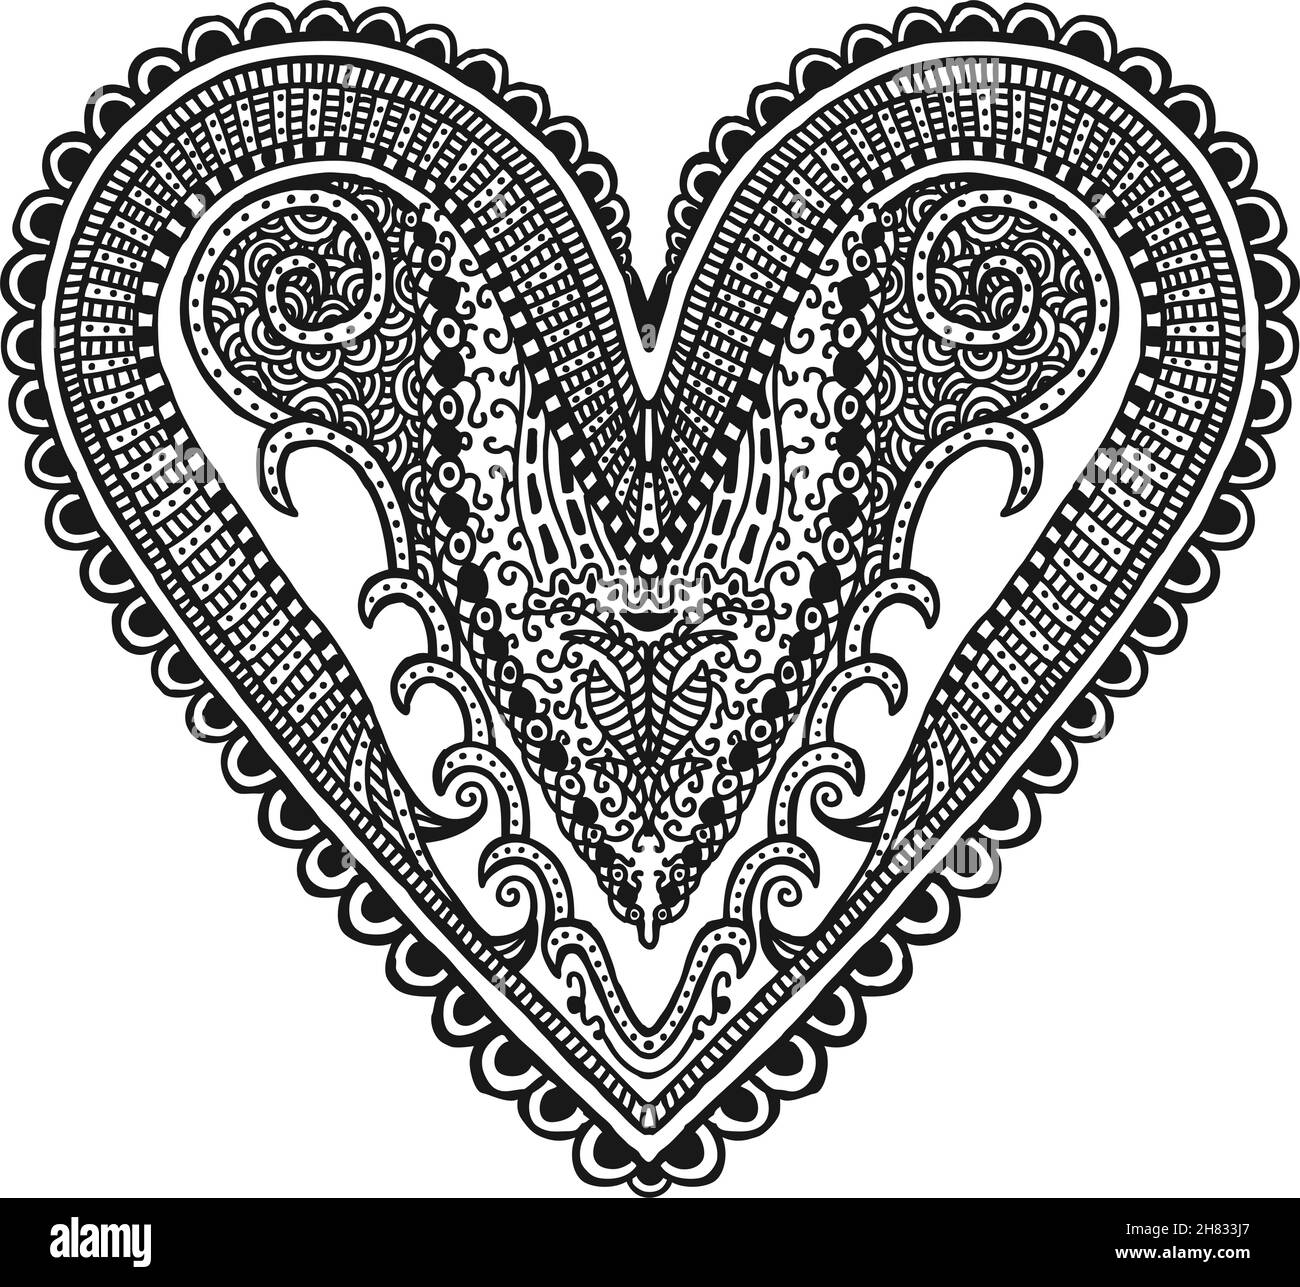 Hand drawn heart, illustration design element Stock Vector